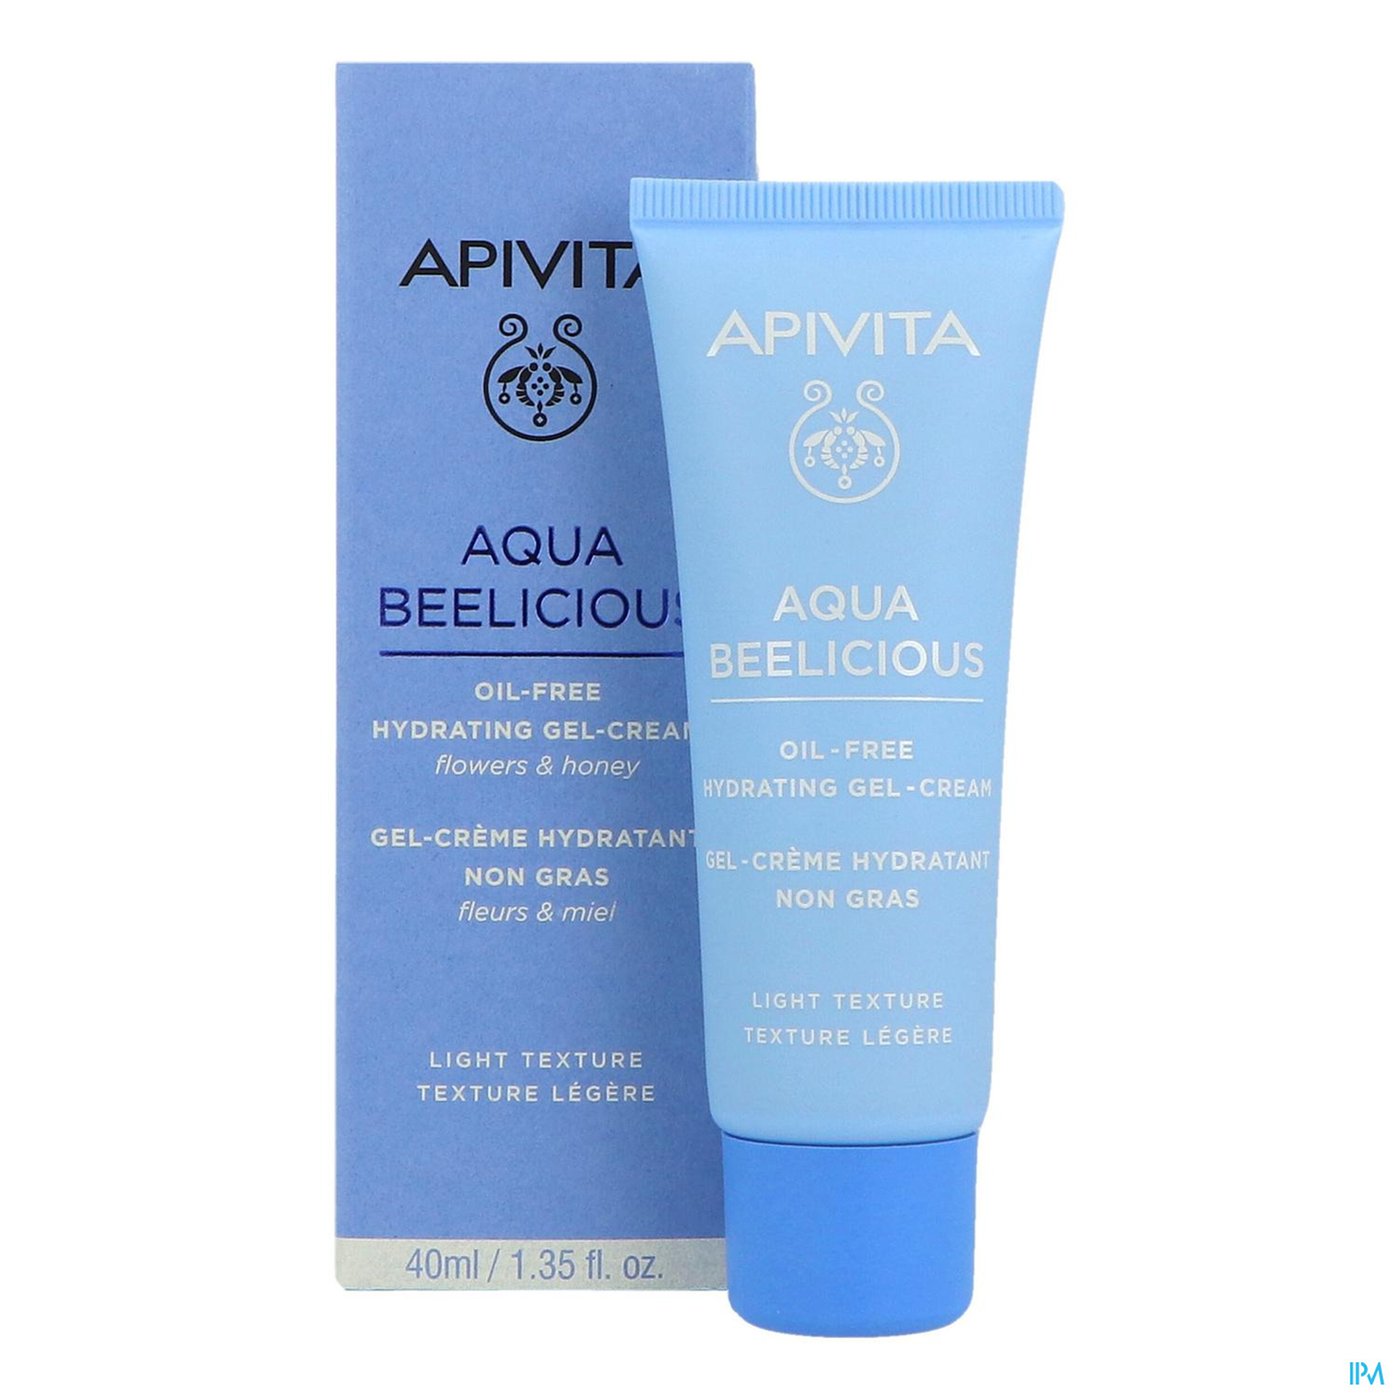 Apivita Aqua Beelicious Oil Free Hydra Gel Cr 40ml productshot